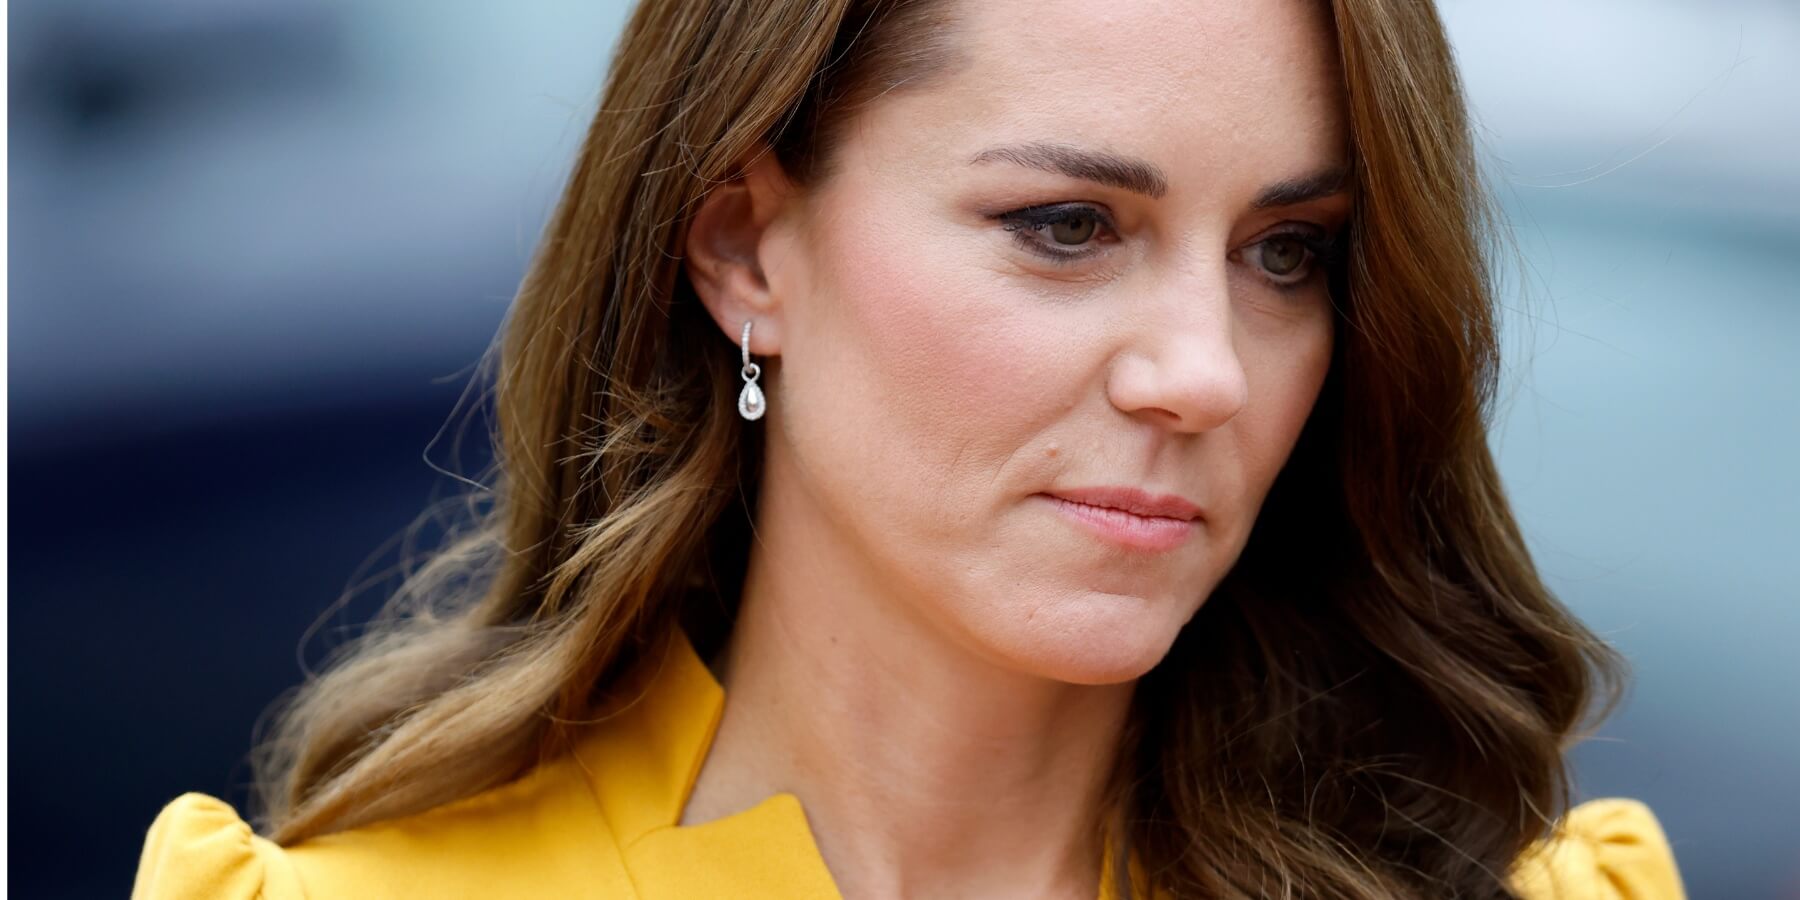 Drama surrounding Kate Middleton's health felt similar to 'The Crown' on Netflix says commentator